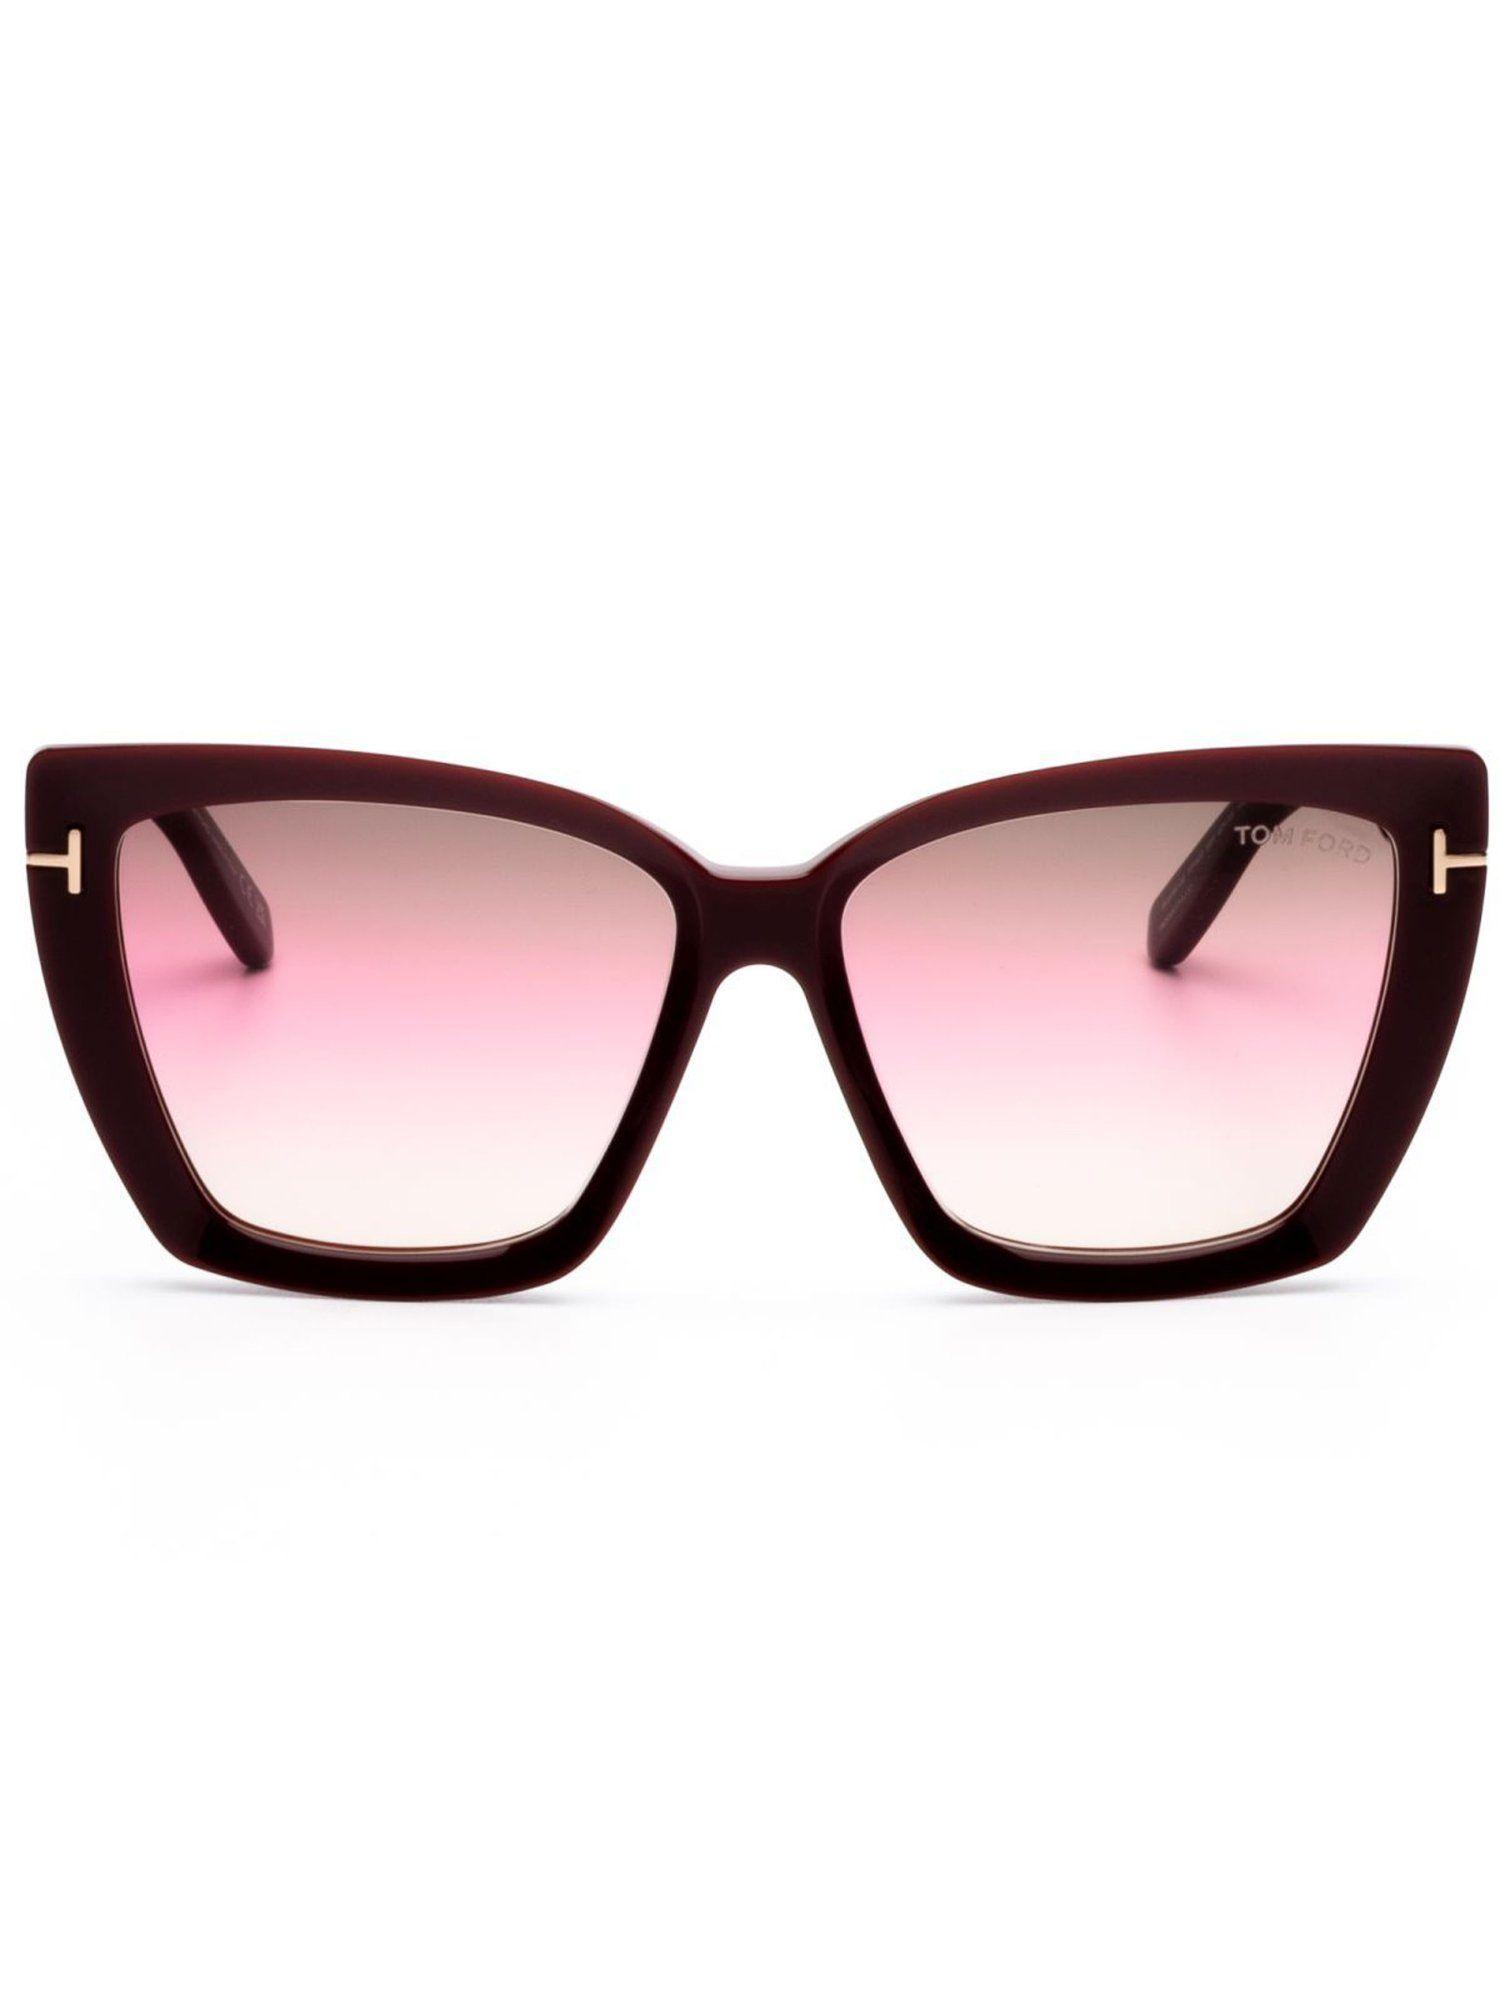 tom ford ft09205769f scarlet-02 cat eye sunglasses for women pink (57)